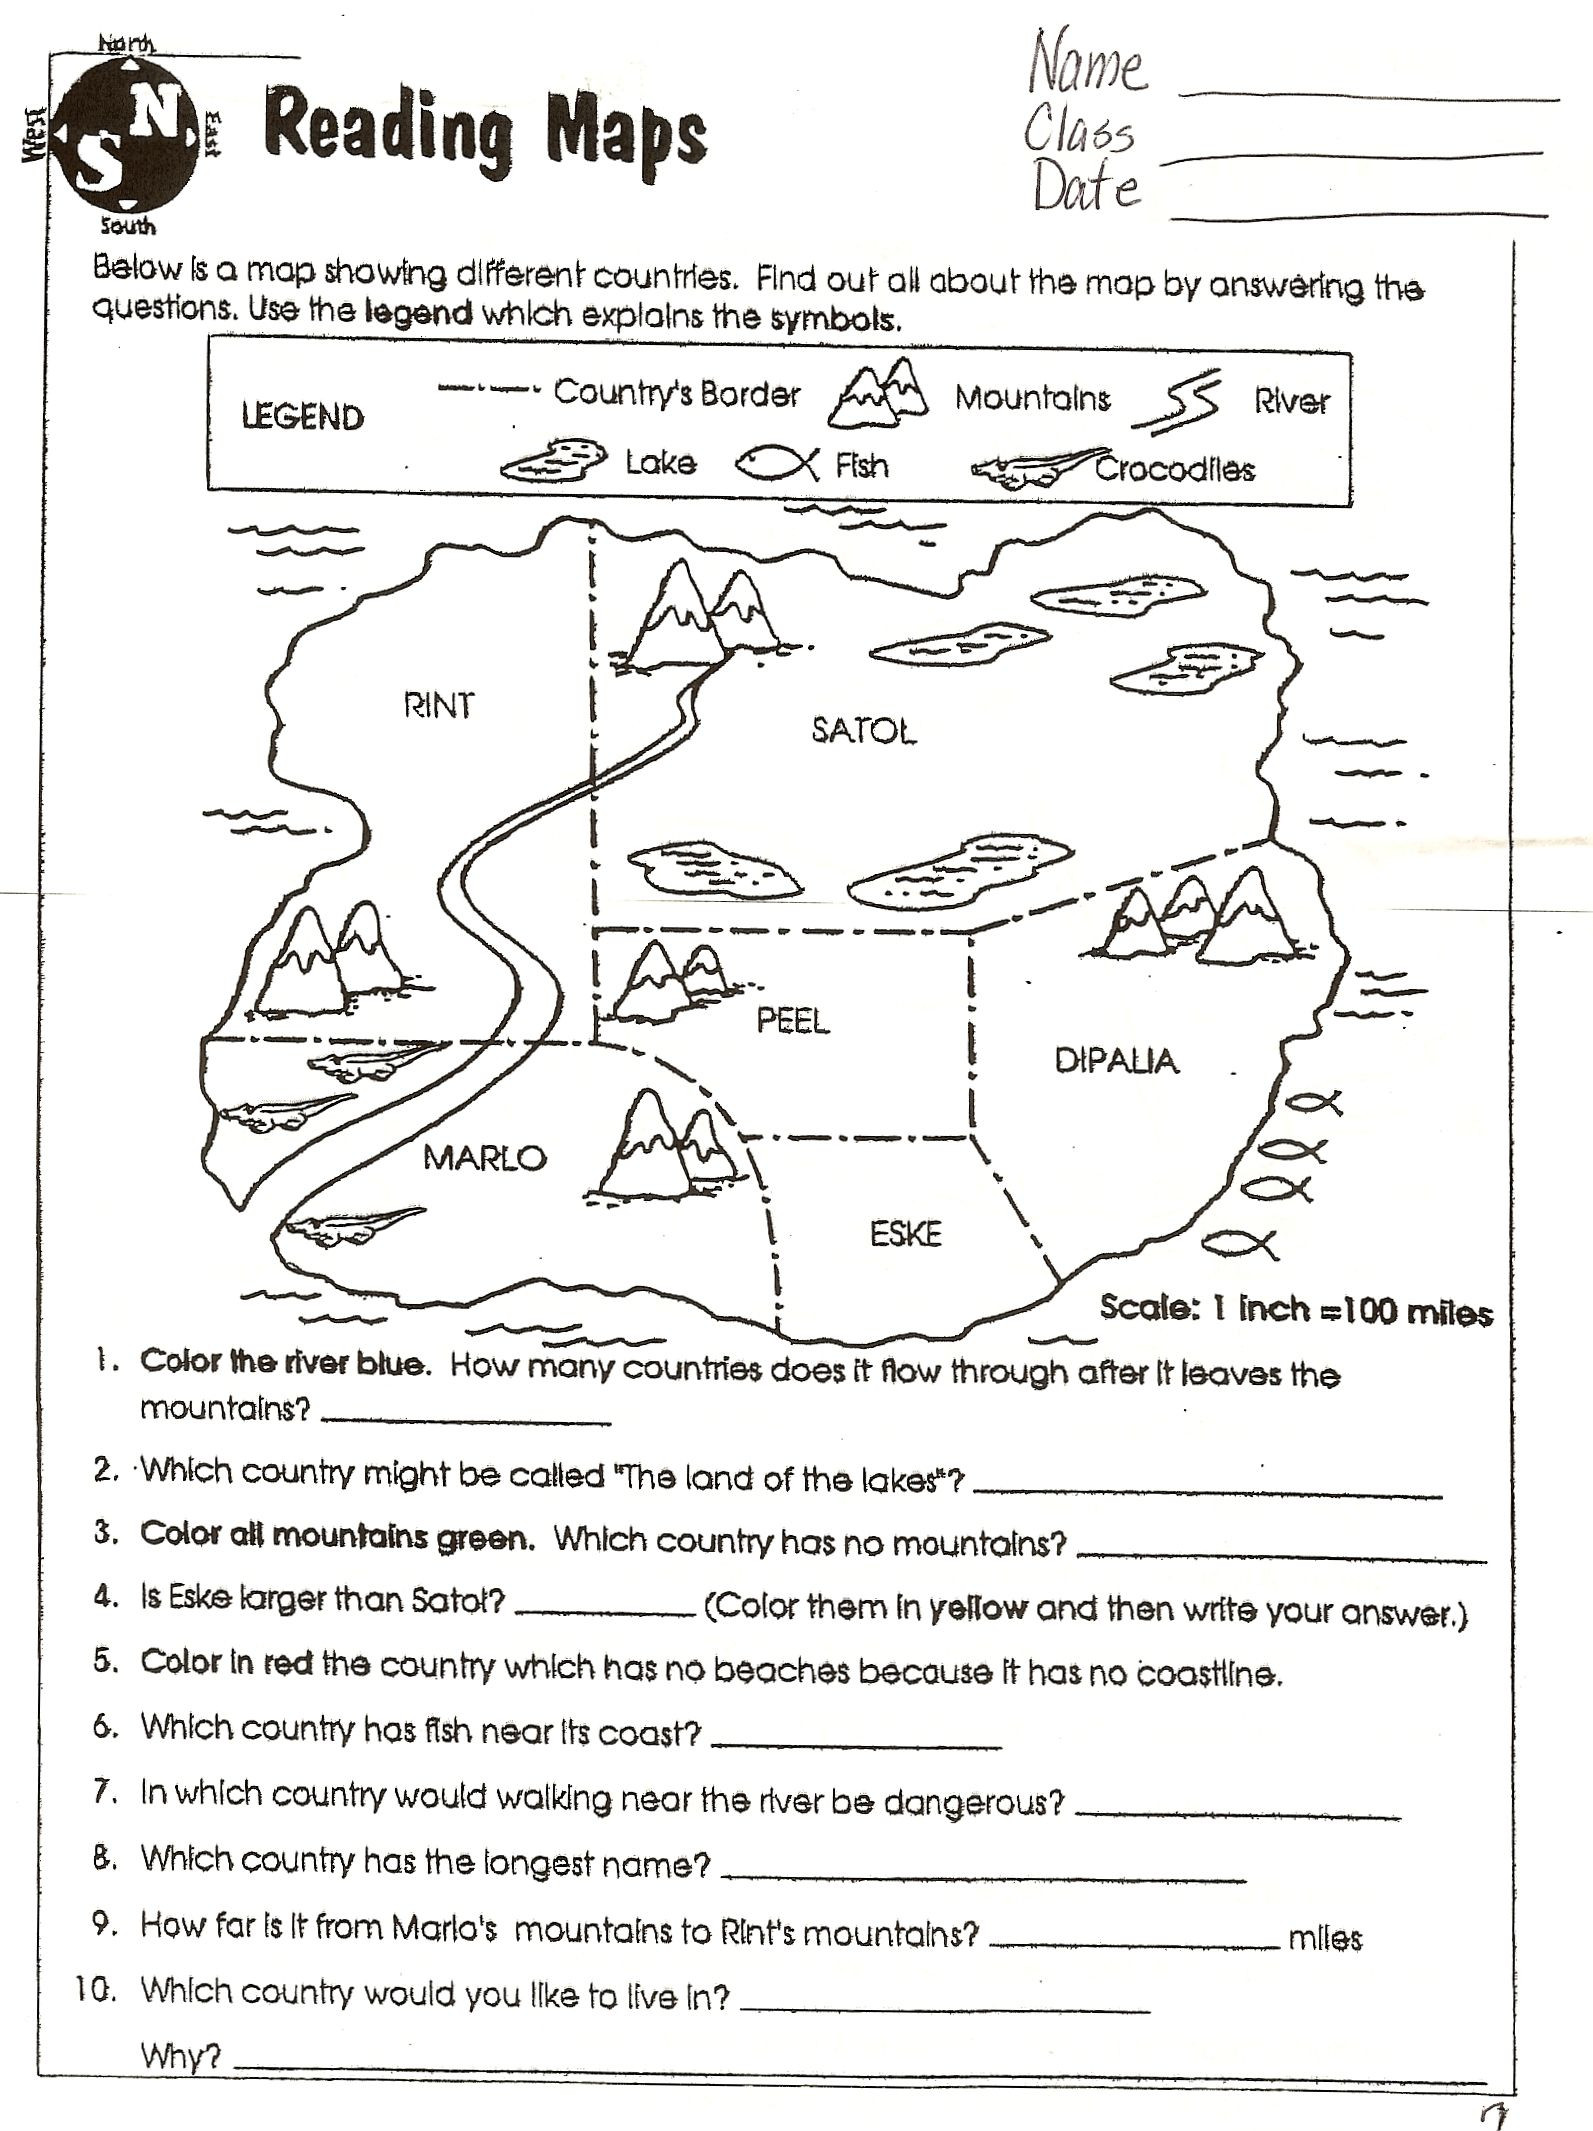 Map Scale Worksheet 4th Grade social Stu S Skills